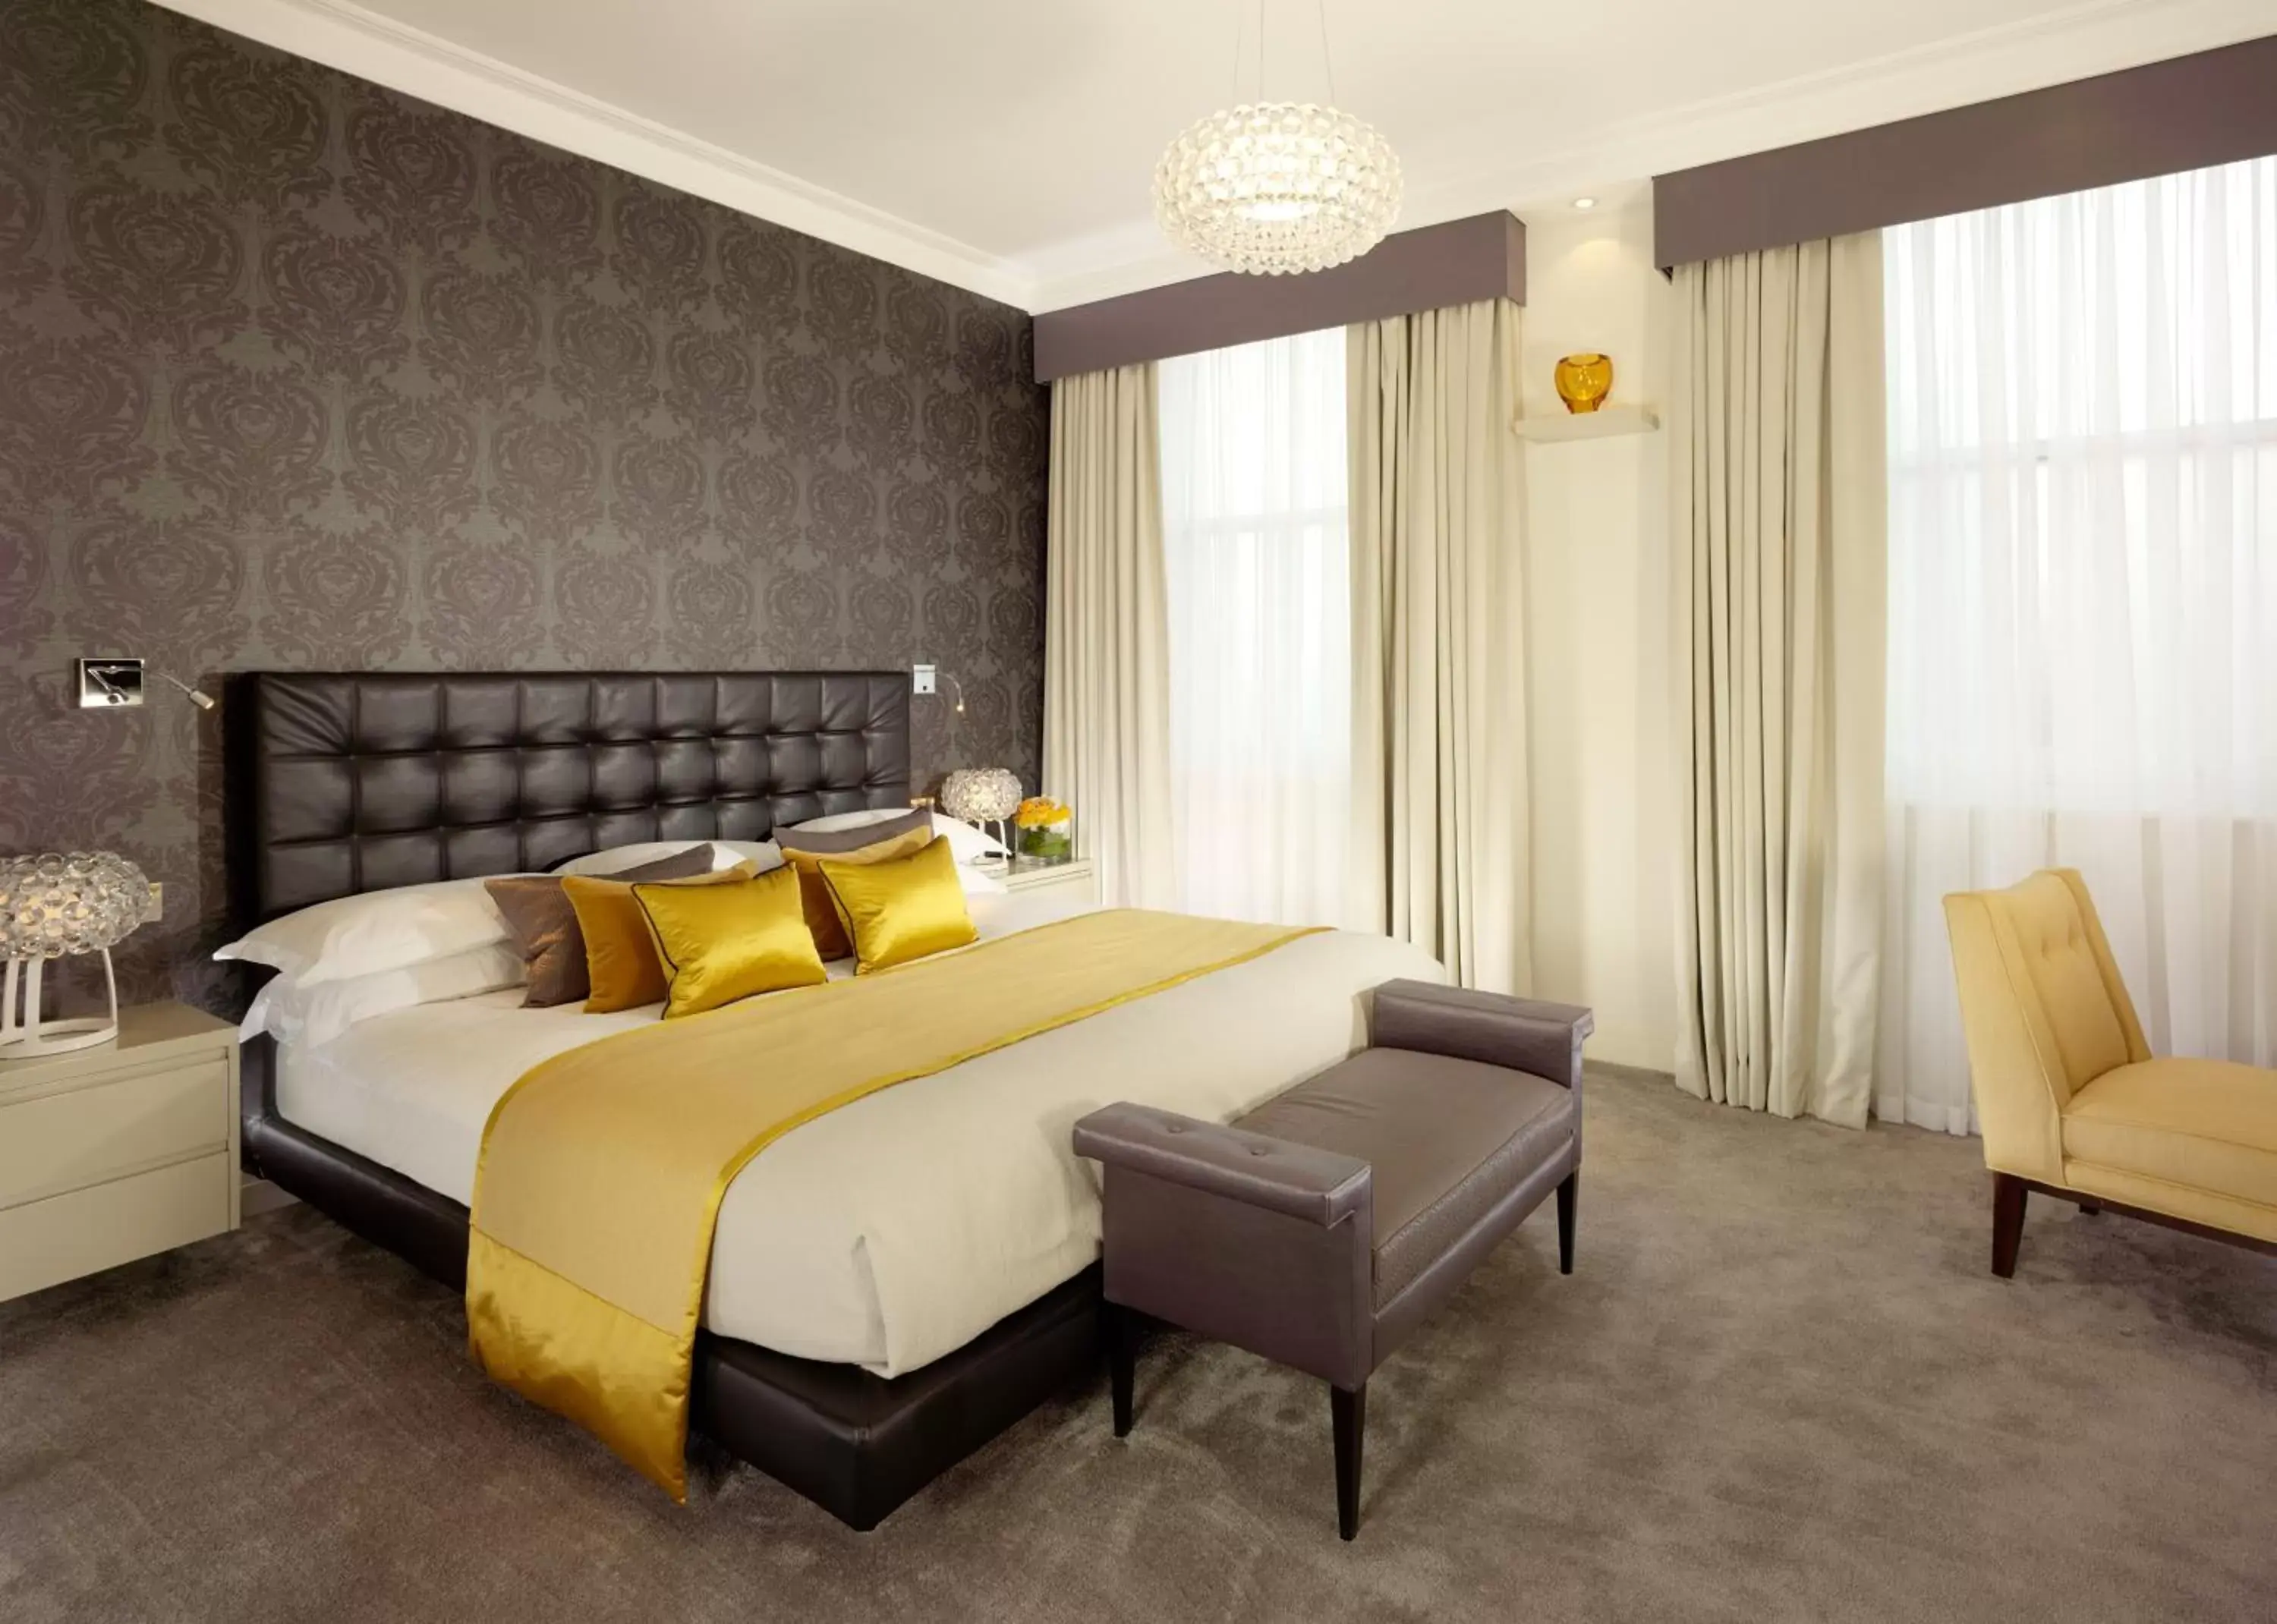 Bed in Taj 51 Buckingham Gate Suites and Residences